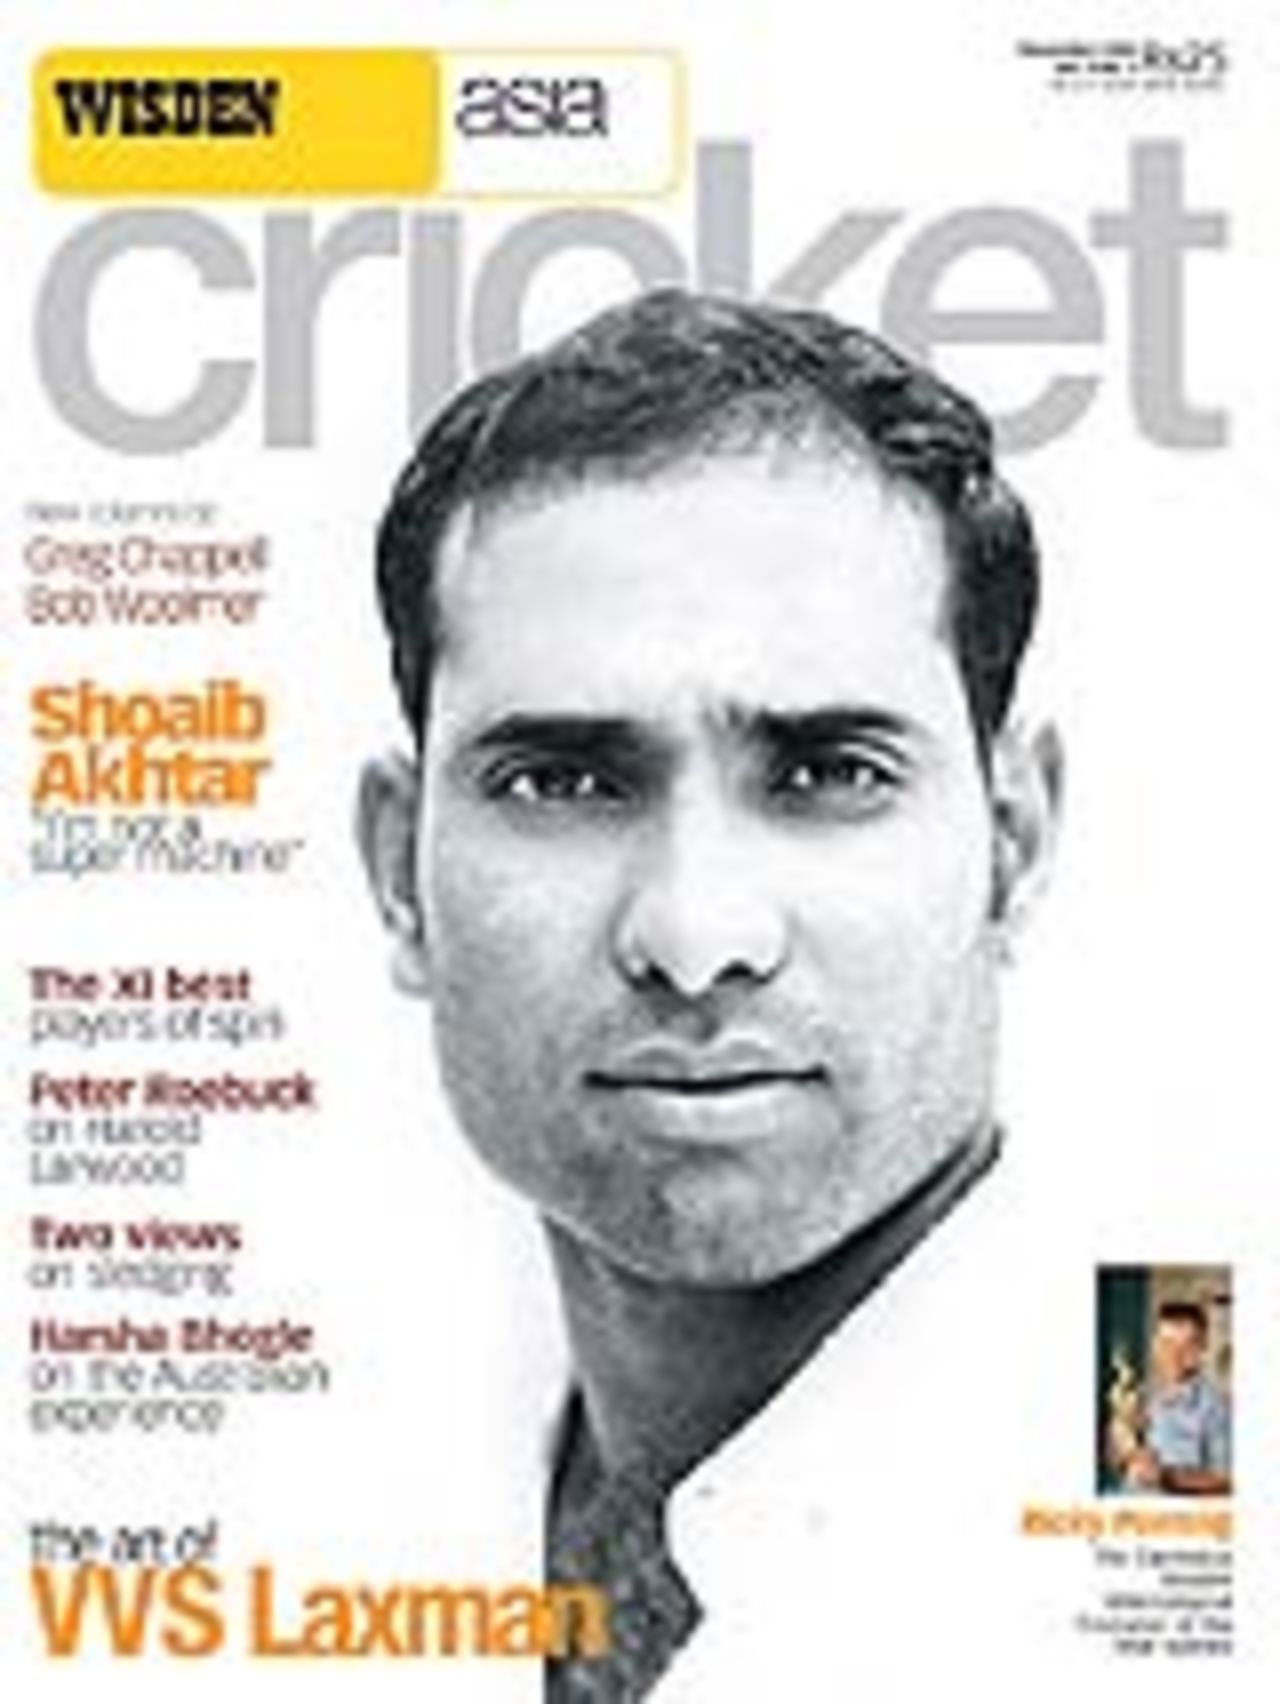 Wisden Asia Cricket cover, December issue